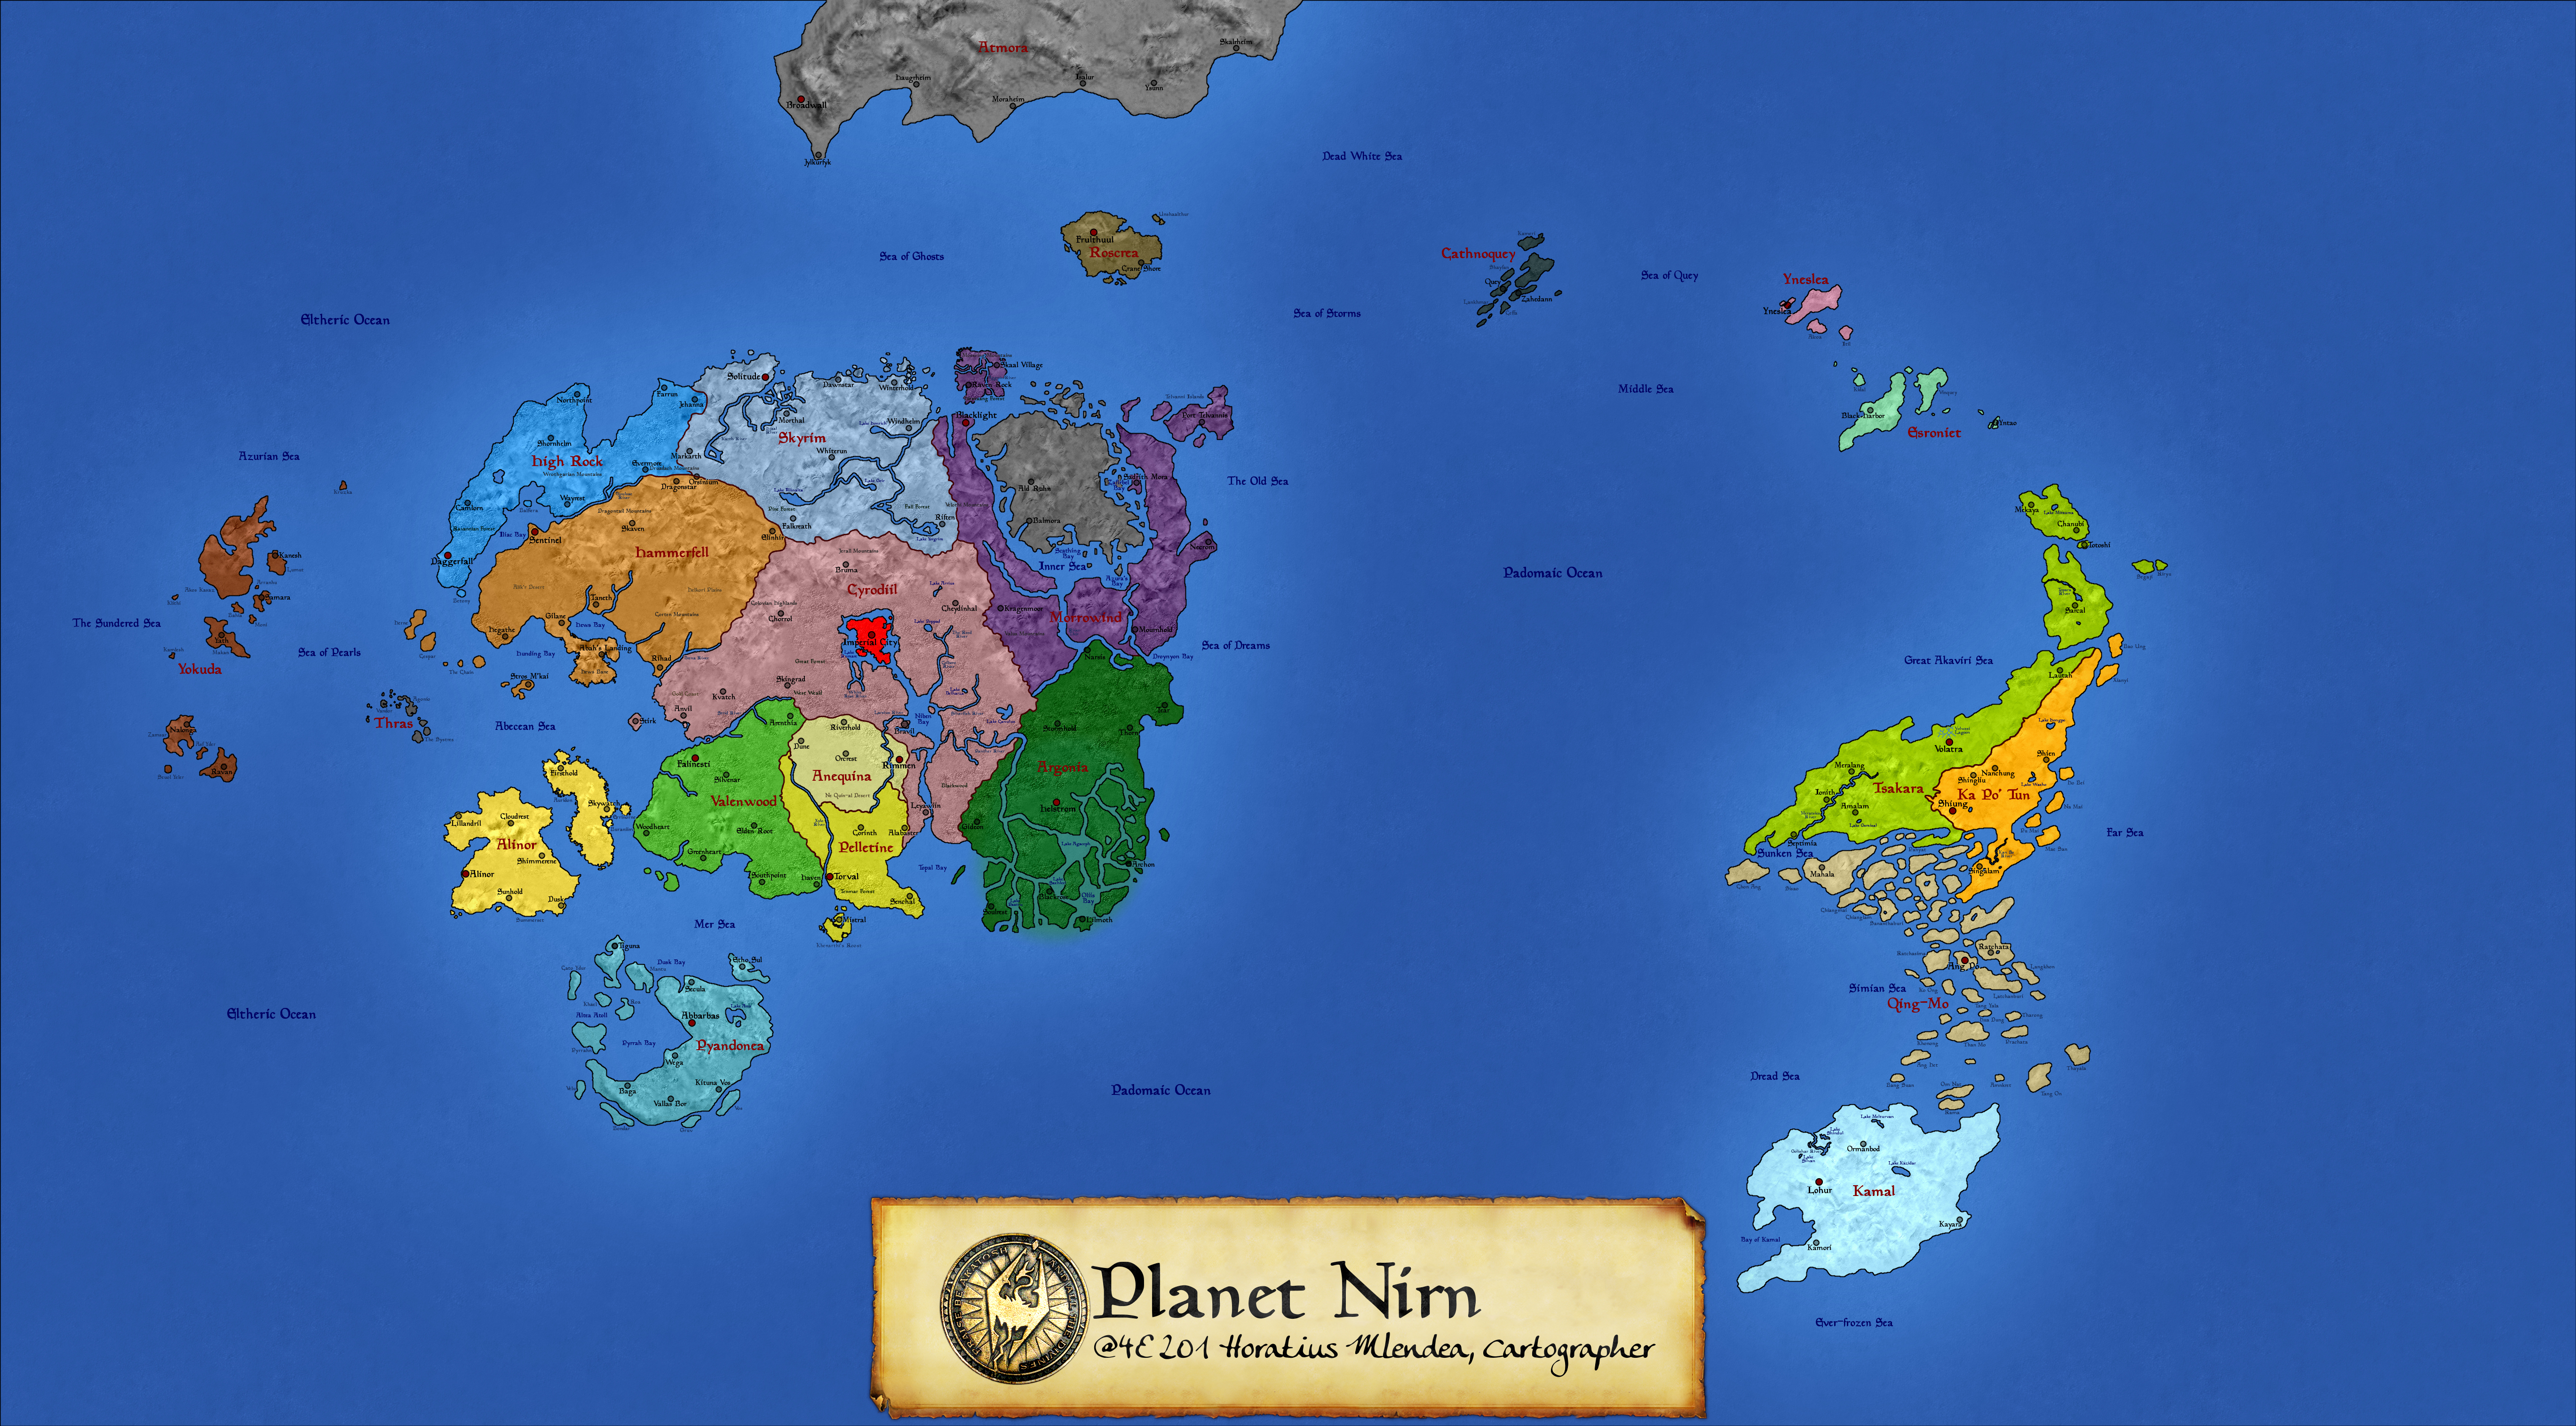 Elder Scrolls World Map